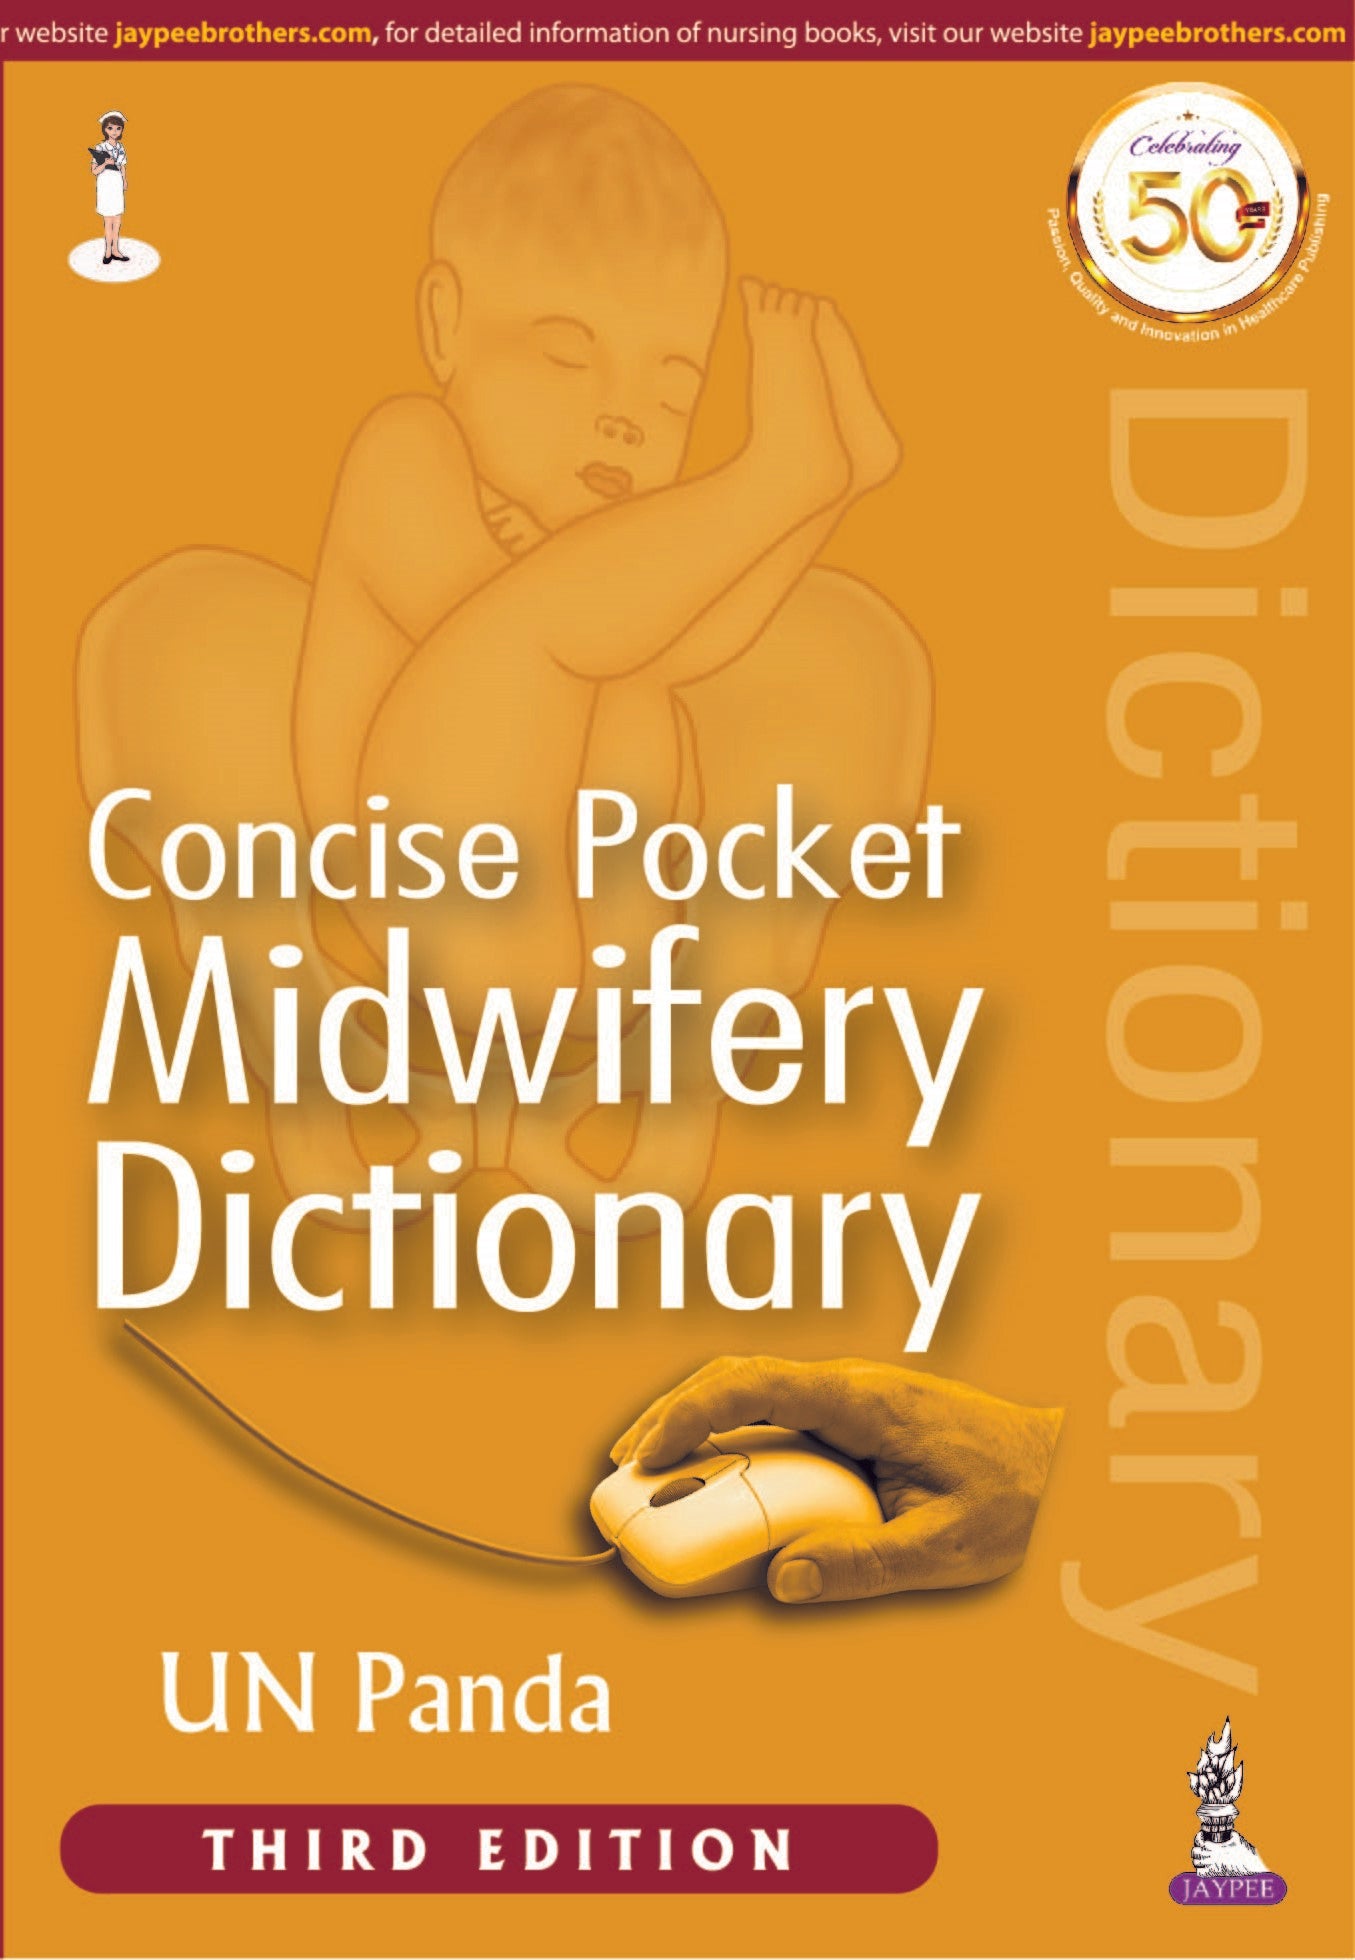 CONCISE POCKET MIDWIFERY DICTIONARY, 3/E RP,  by UN PANDA